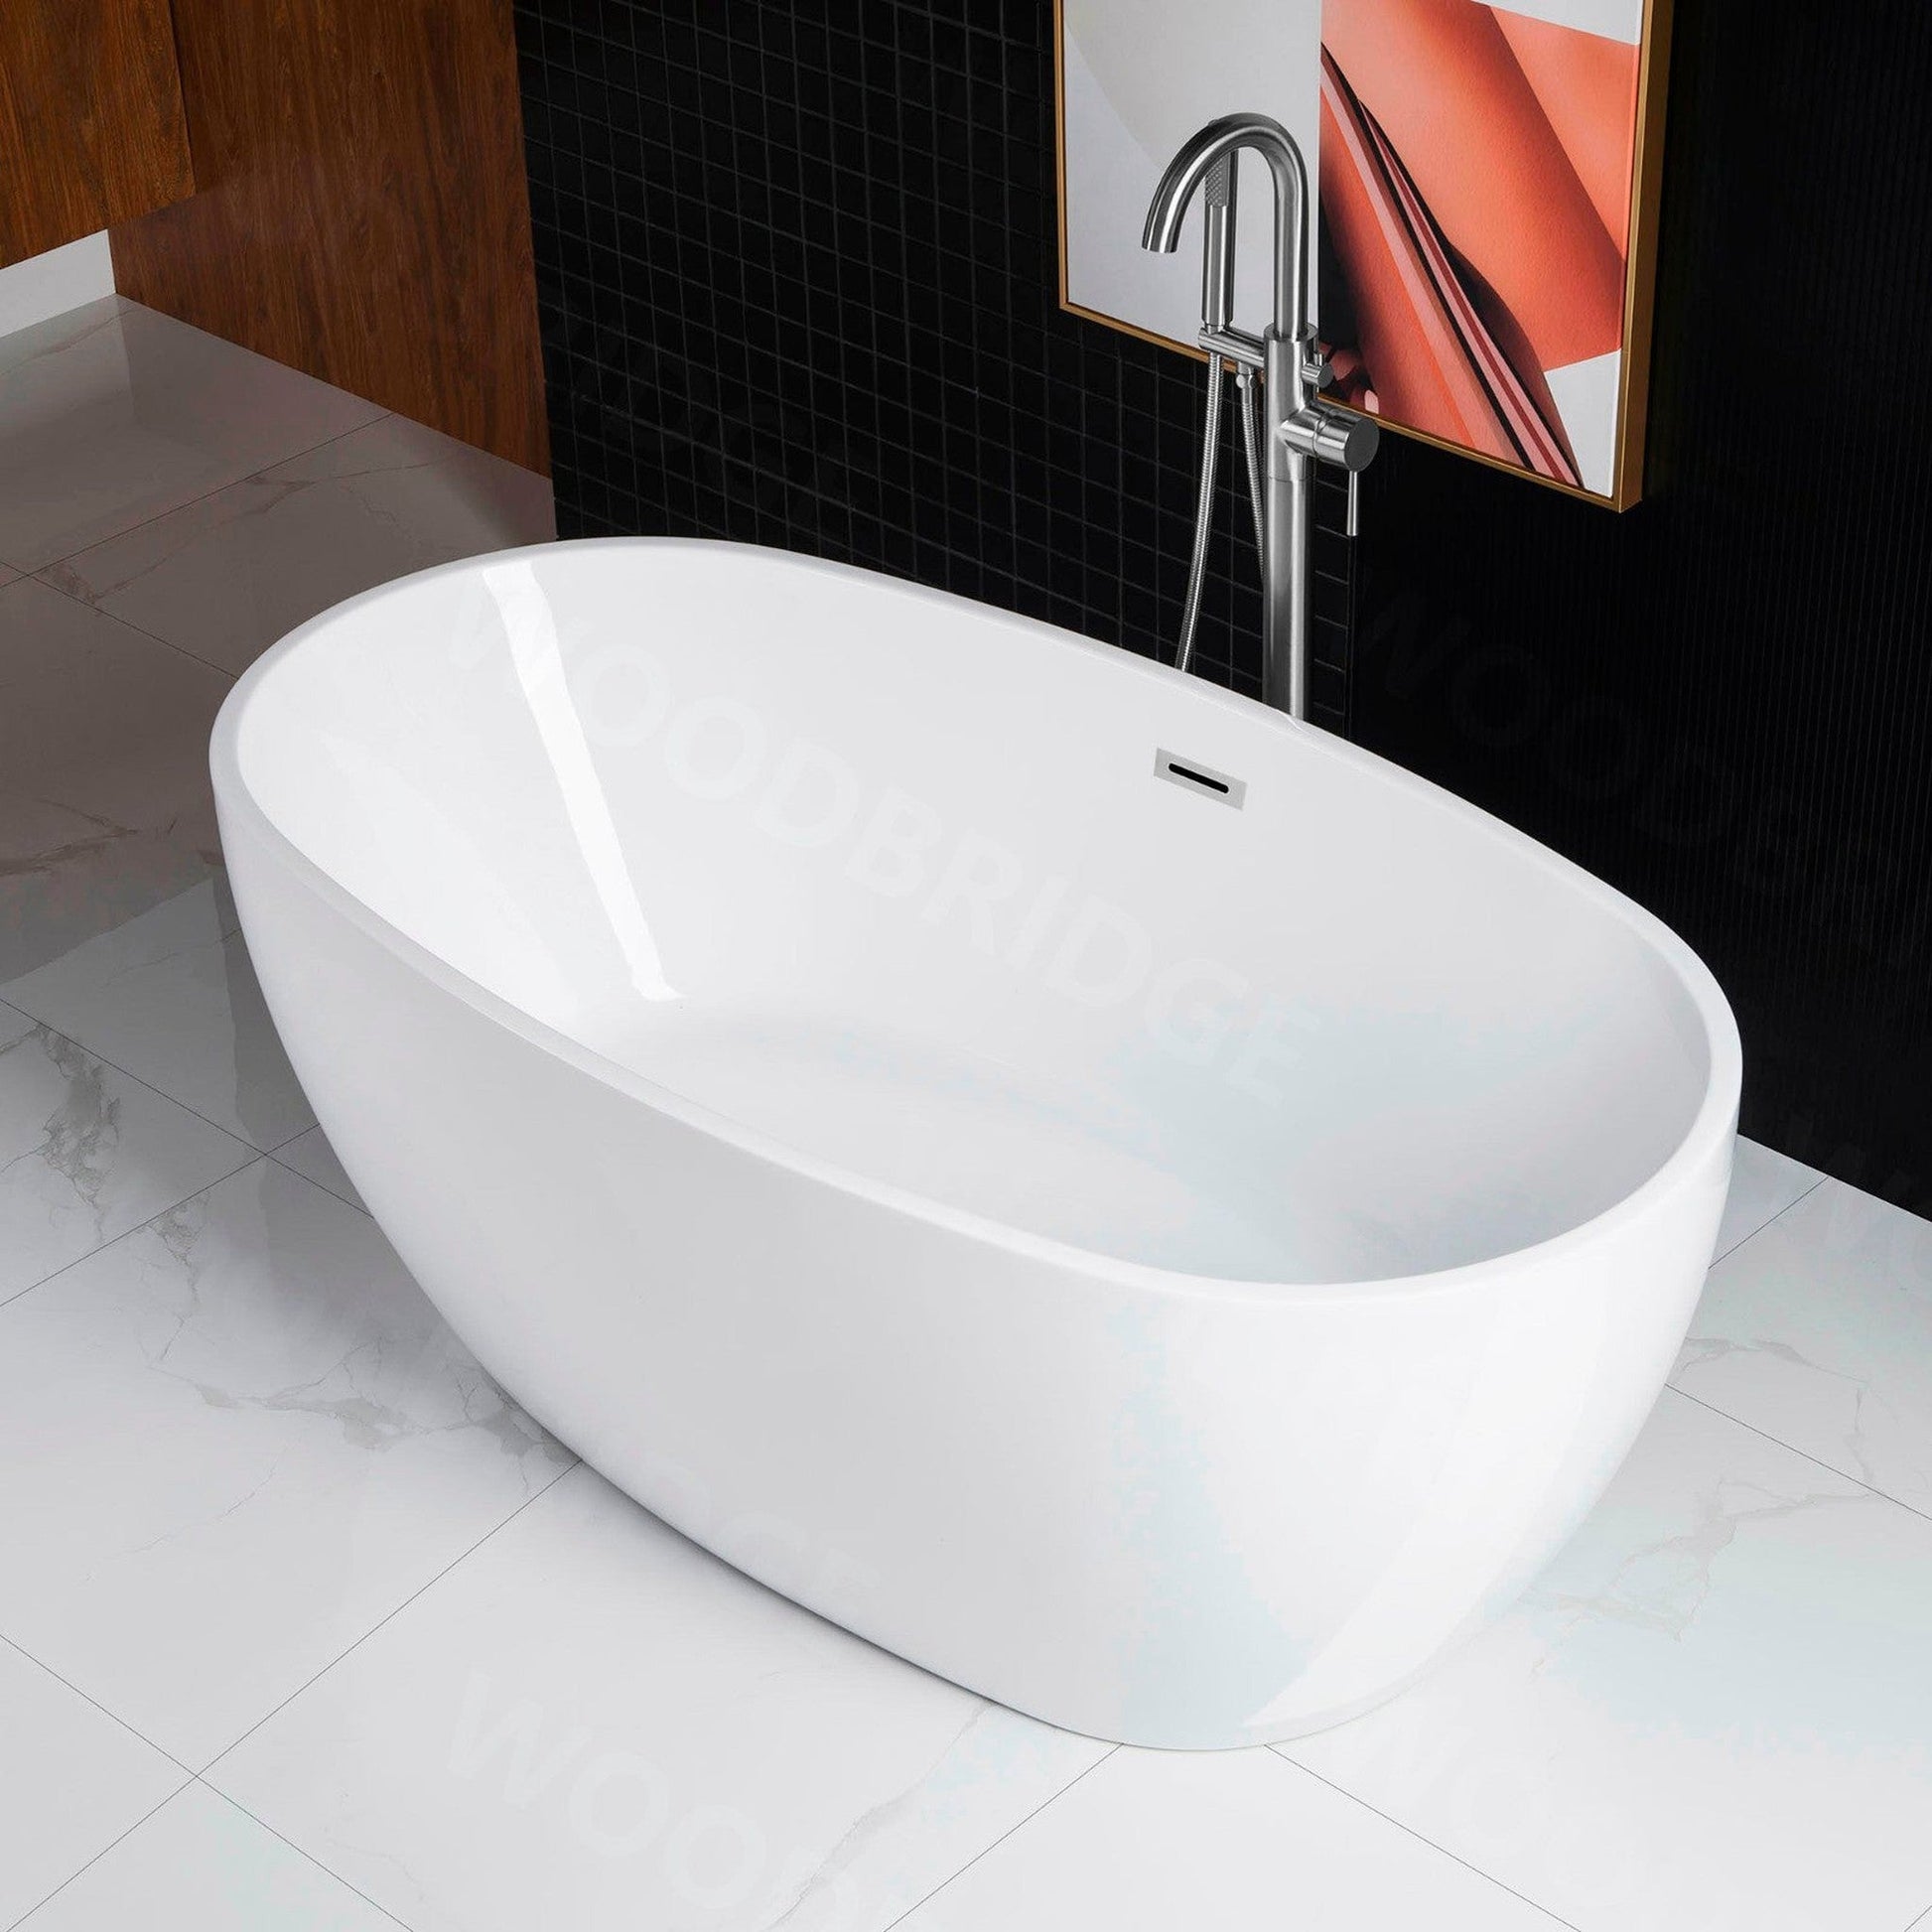 WoodBridge B1418 55" White Acrylic Freestanding Soaking Bathtub With Chrome Drain, Overflow, F0071CHVT Tub Filler and Caddy Tray